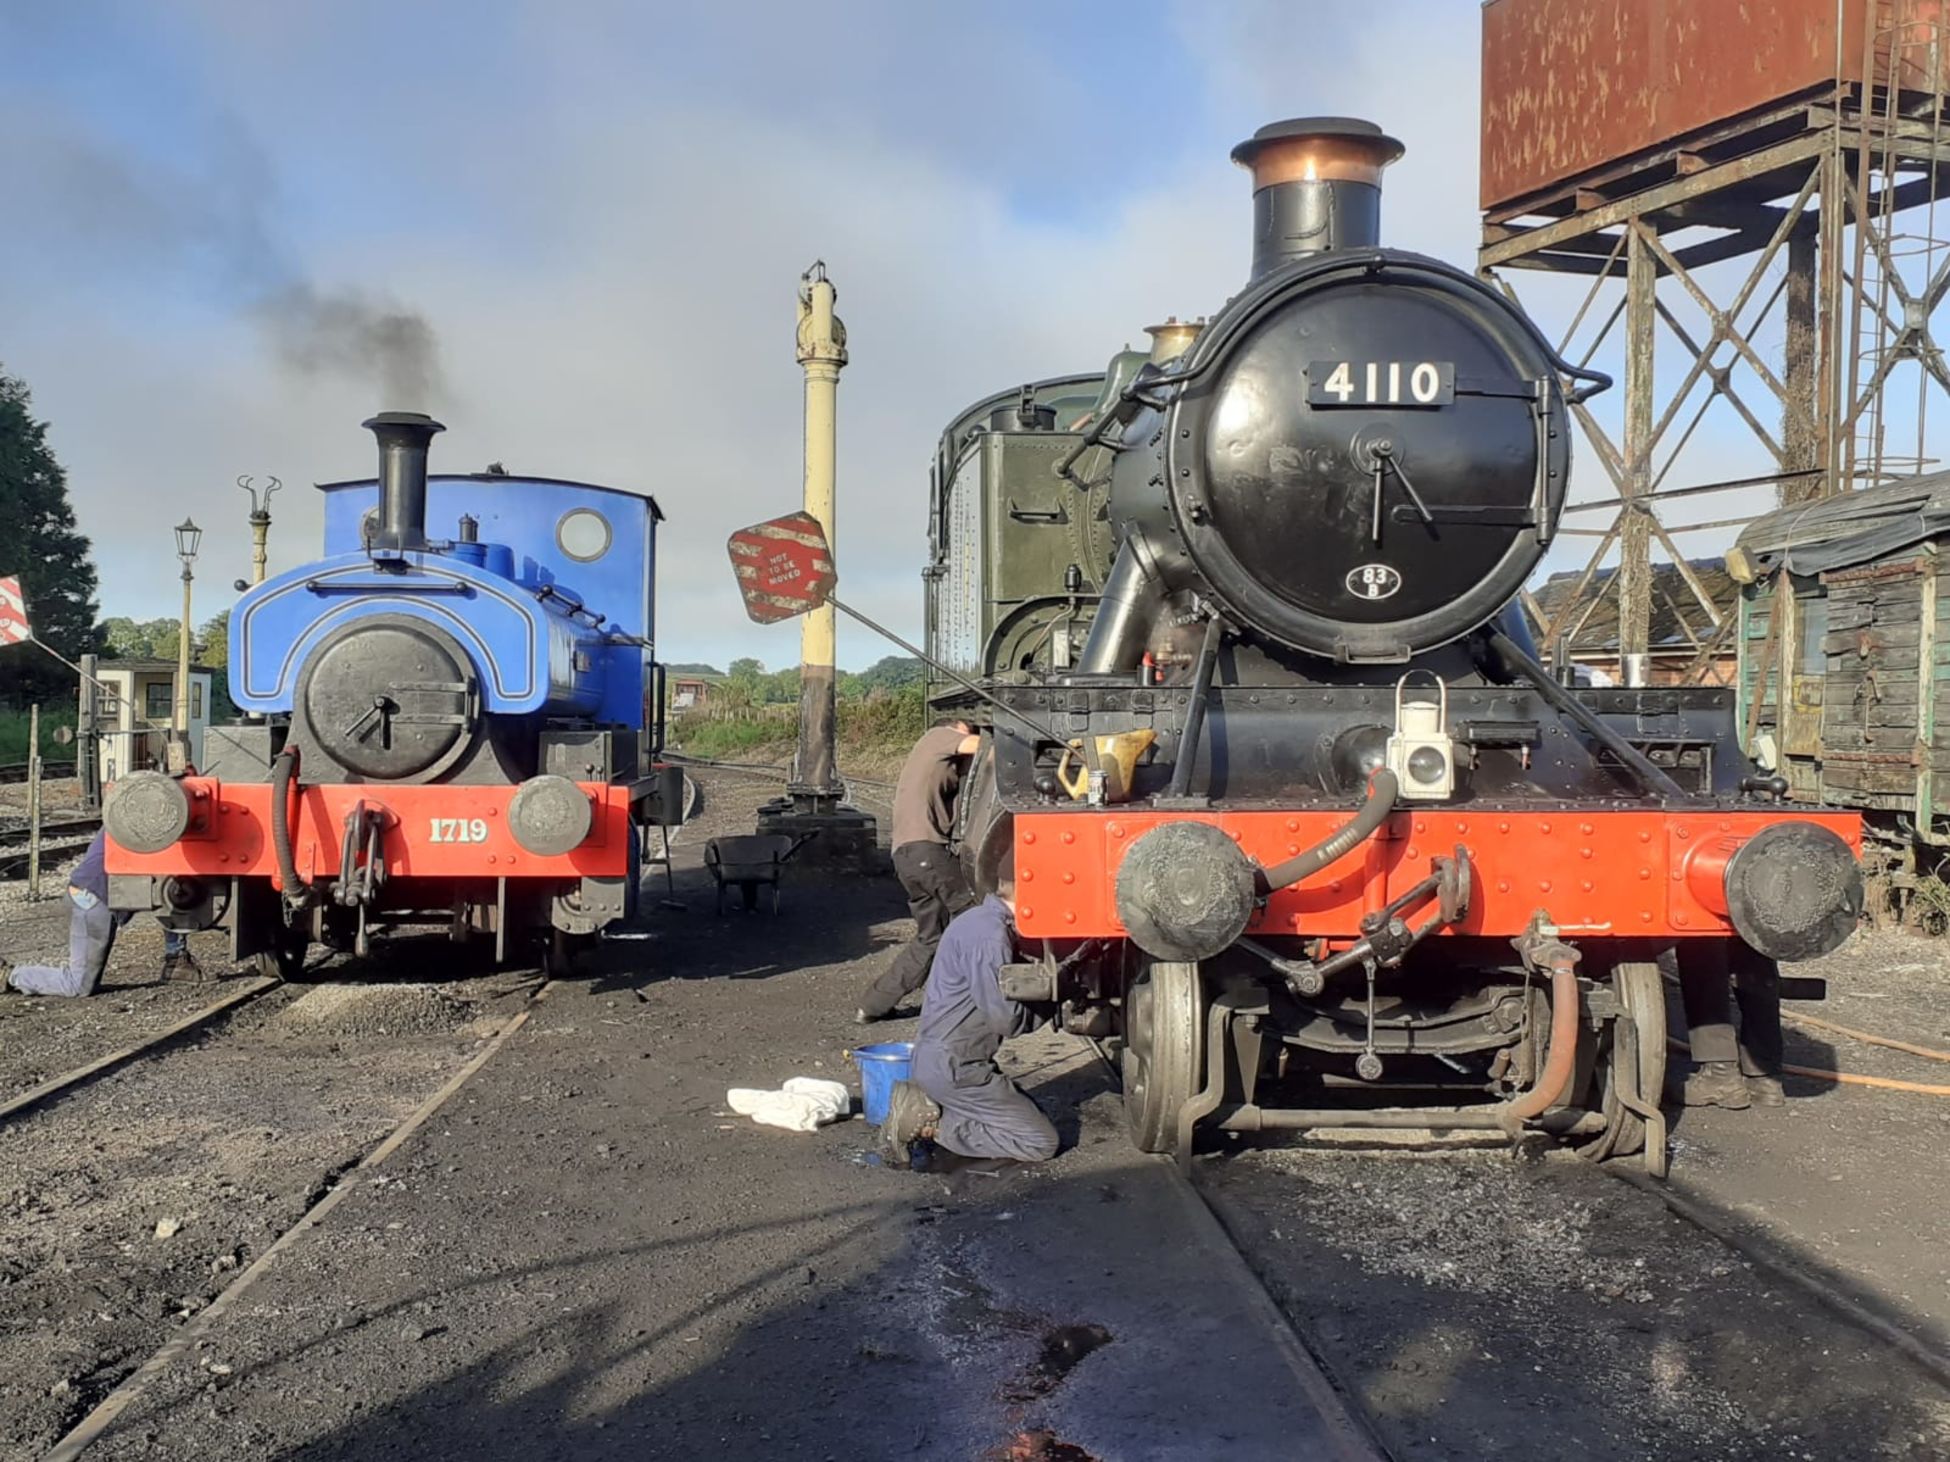 4110 and Lady Nan Locomotives